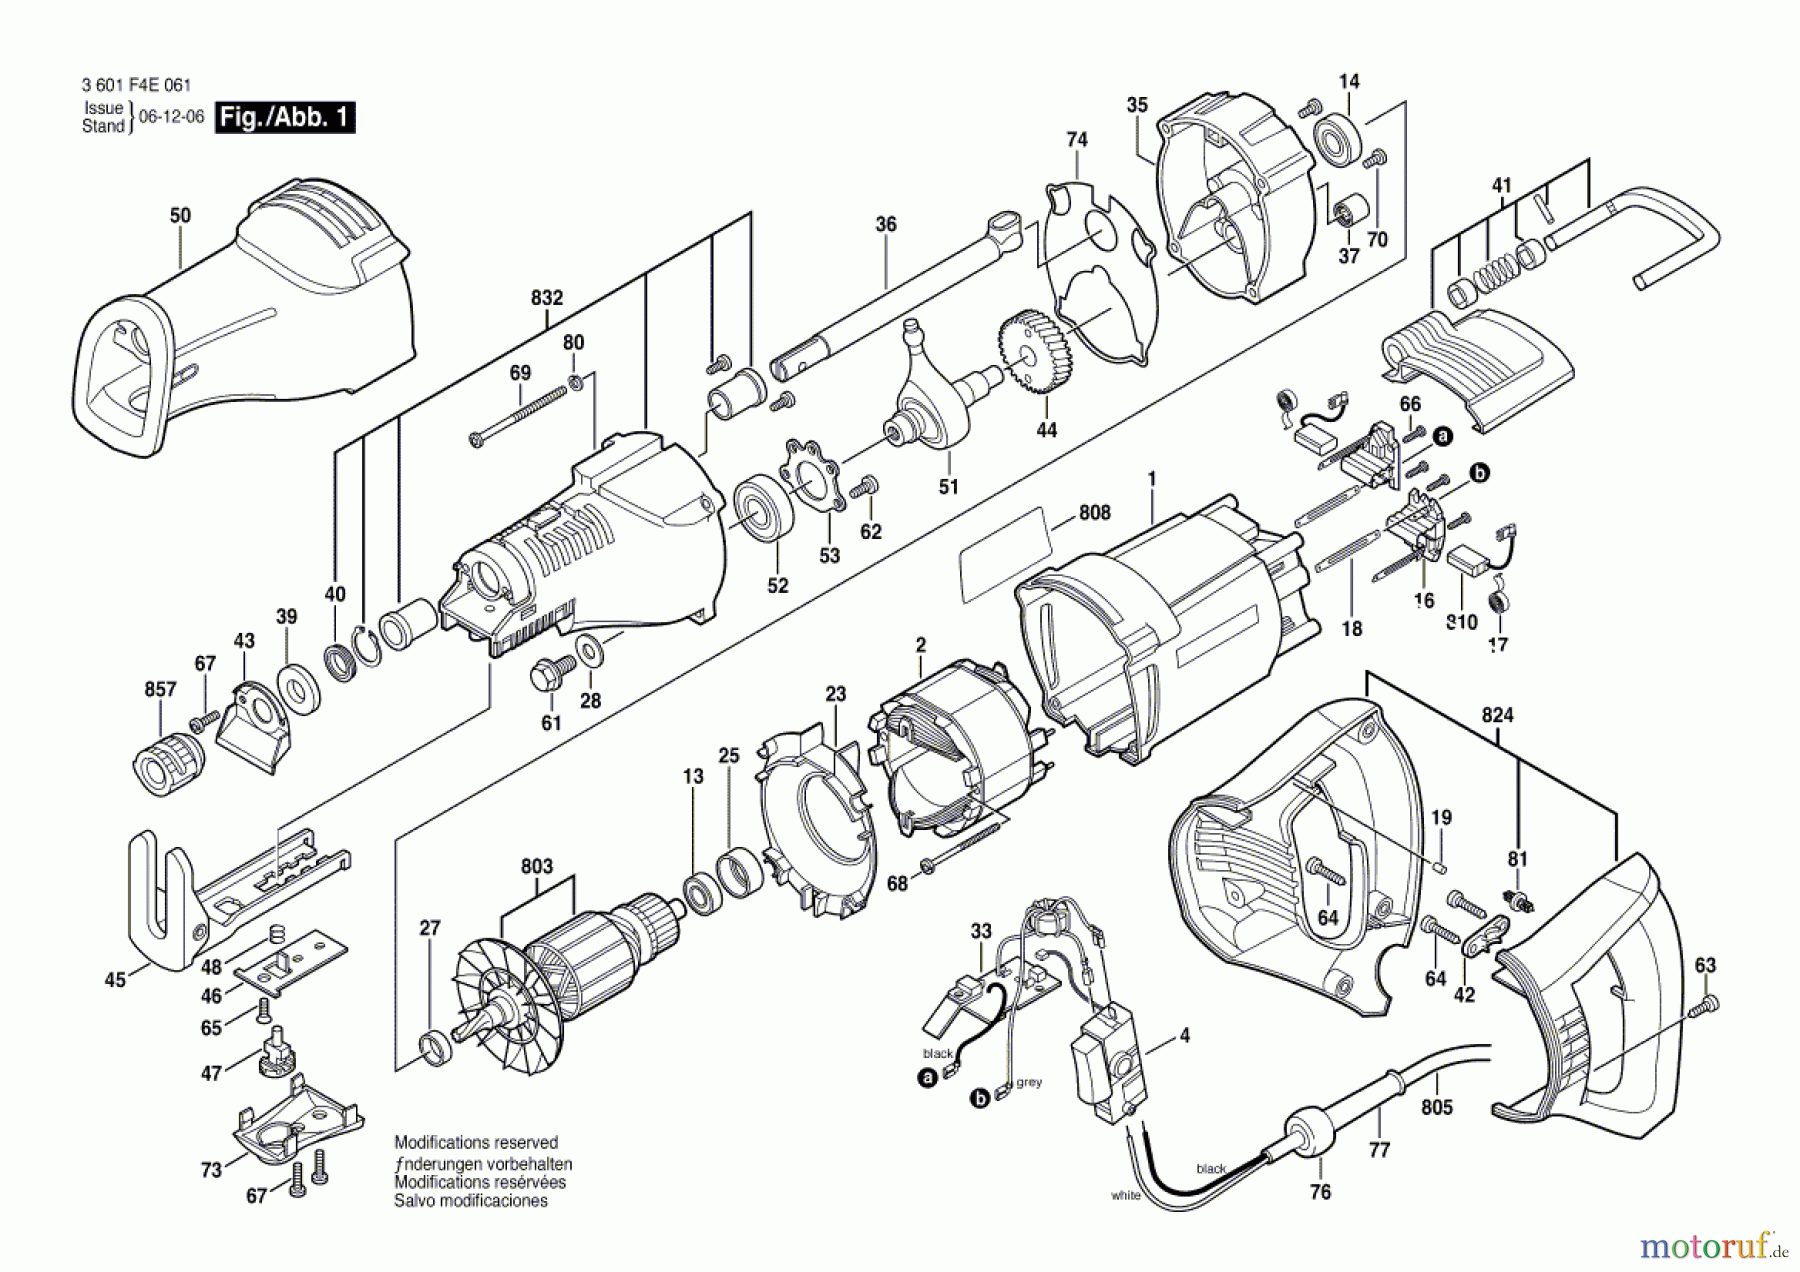  Bosch Werkzeug Säbelsäge GSA 1200 E Seite 1